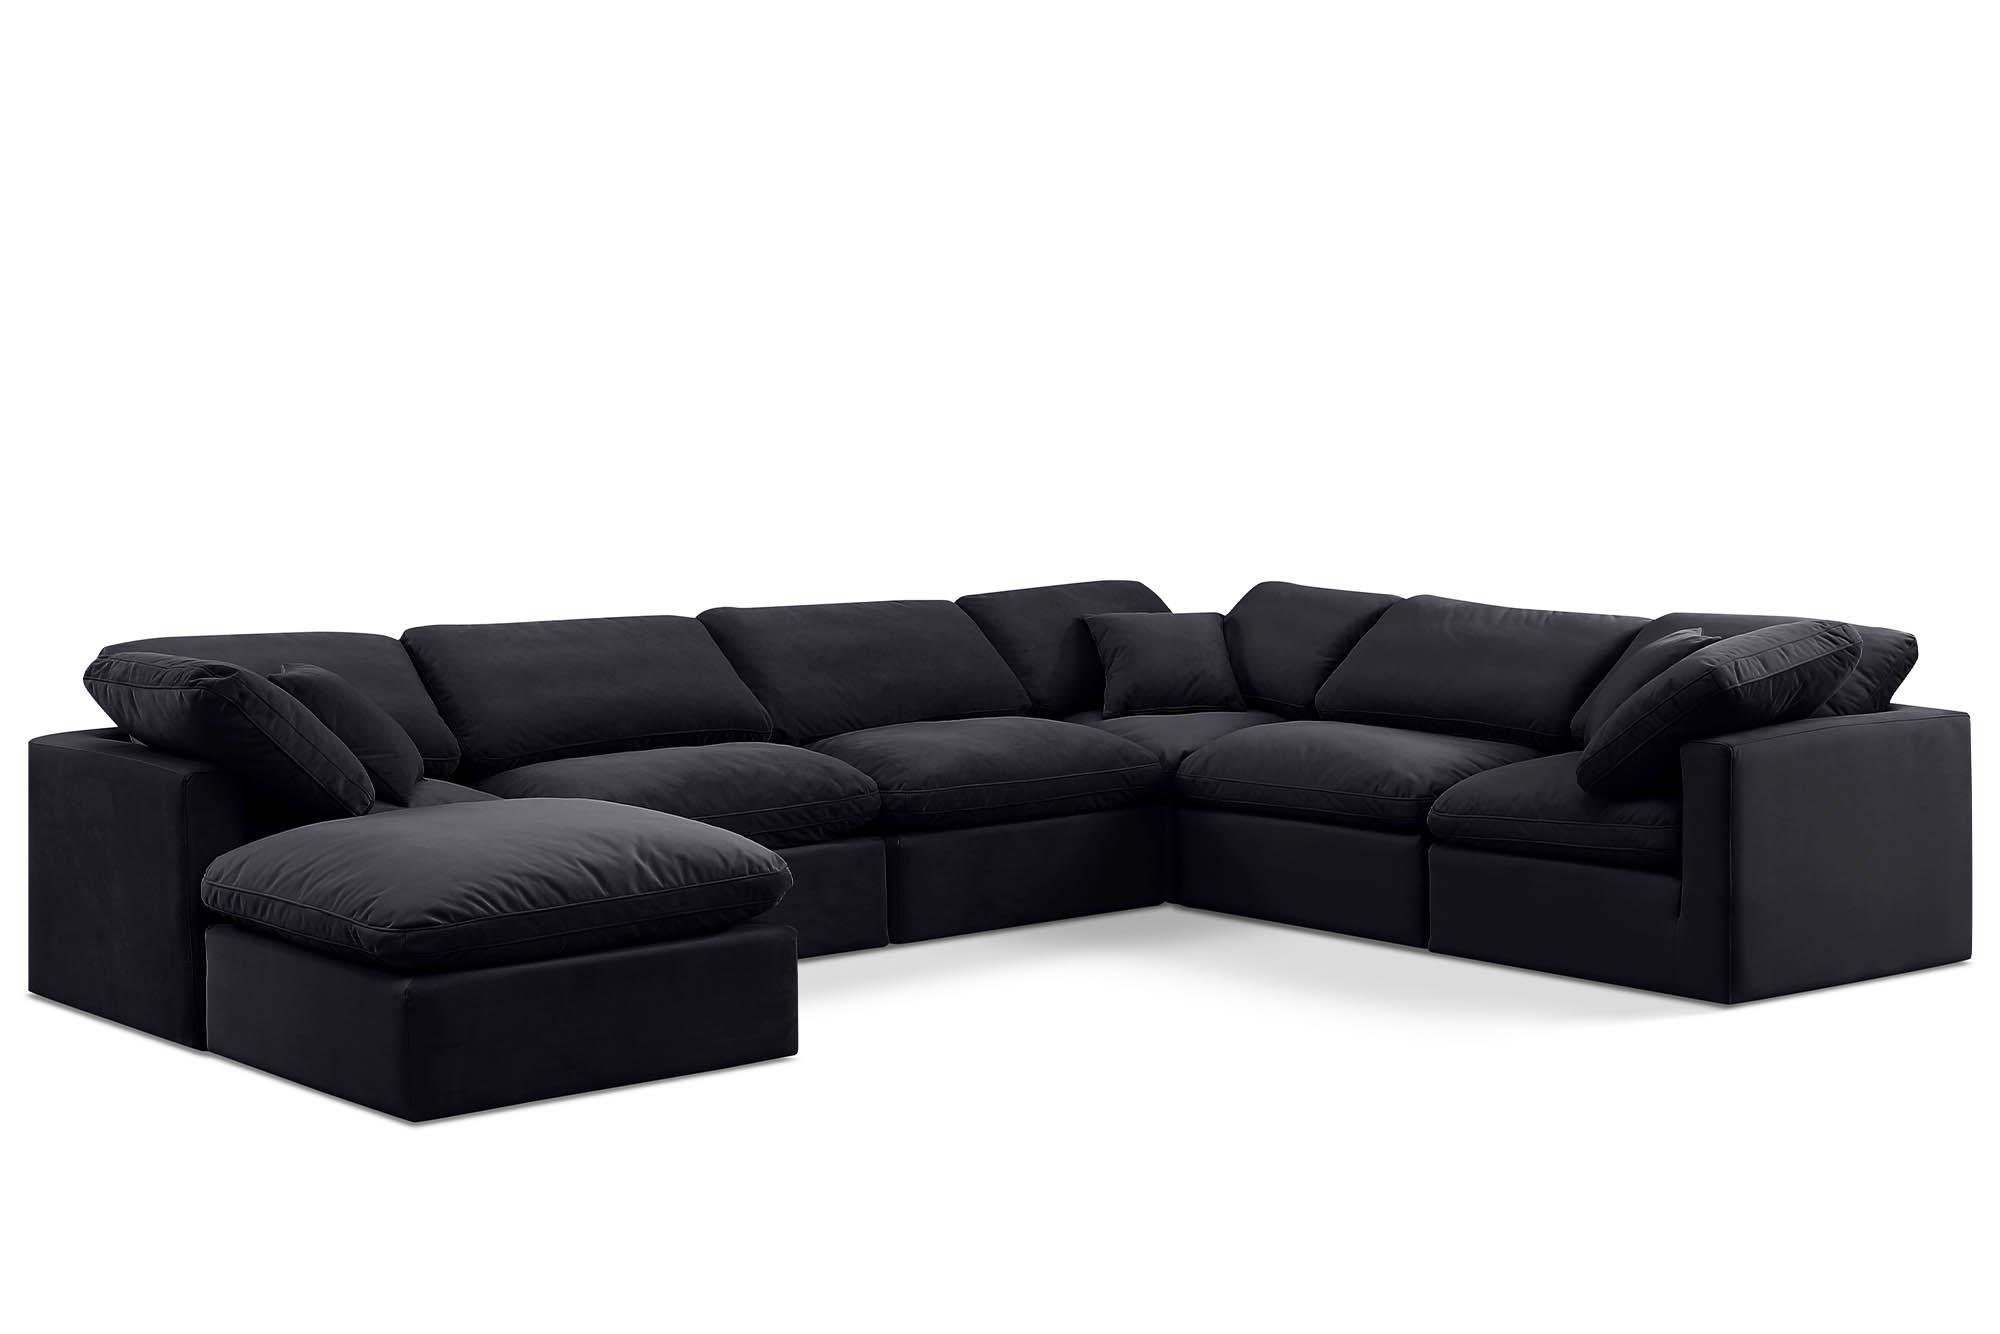 Contemporary, Modern Modular Sectional Sofa INDULGE 147Black-Sec7A 147Black-Sec7A in Black Velvet